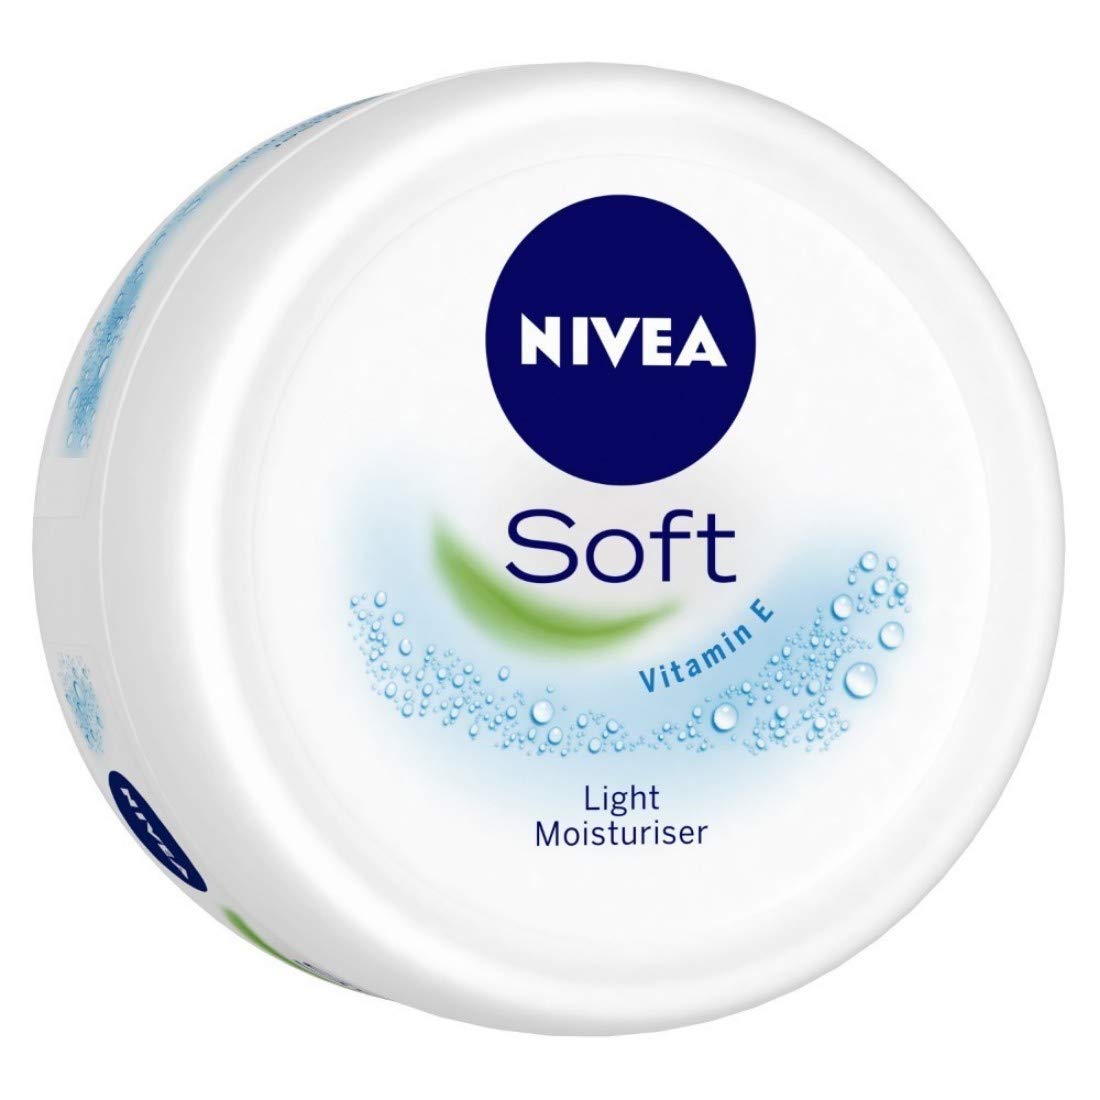 Nivea Soft Light Moisturiser cream